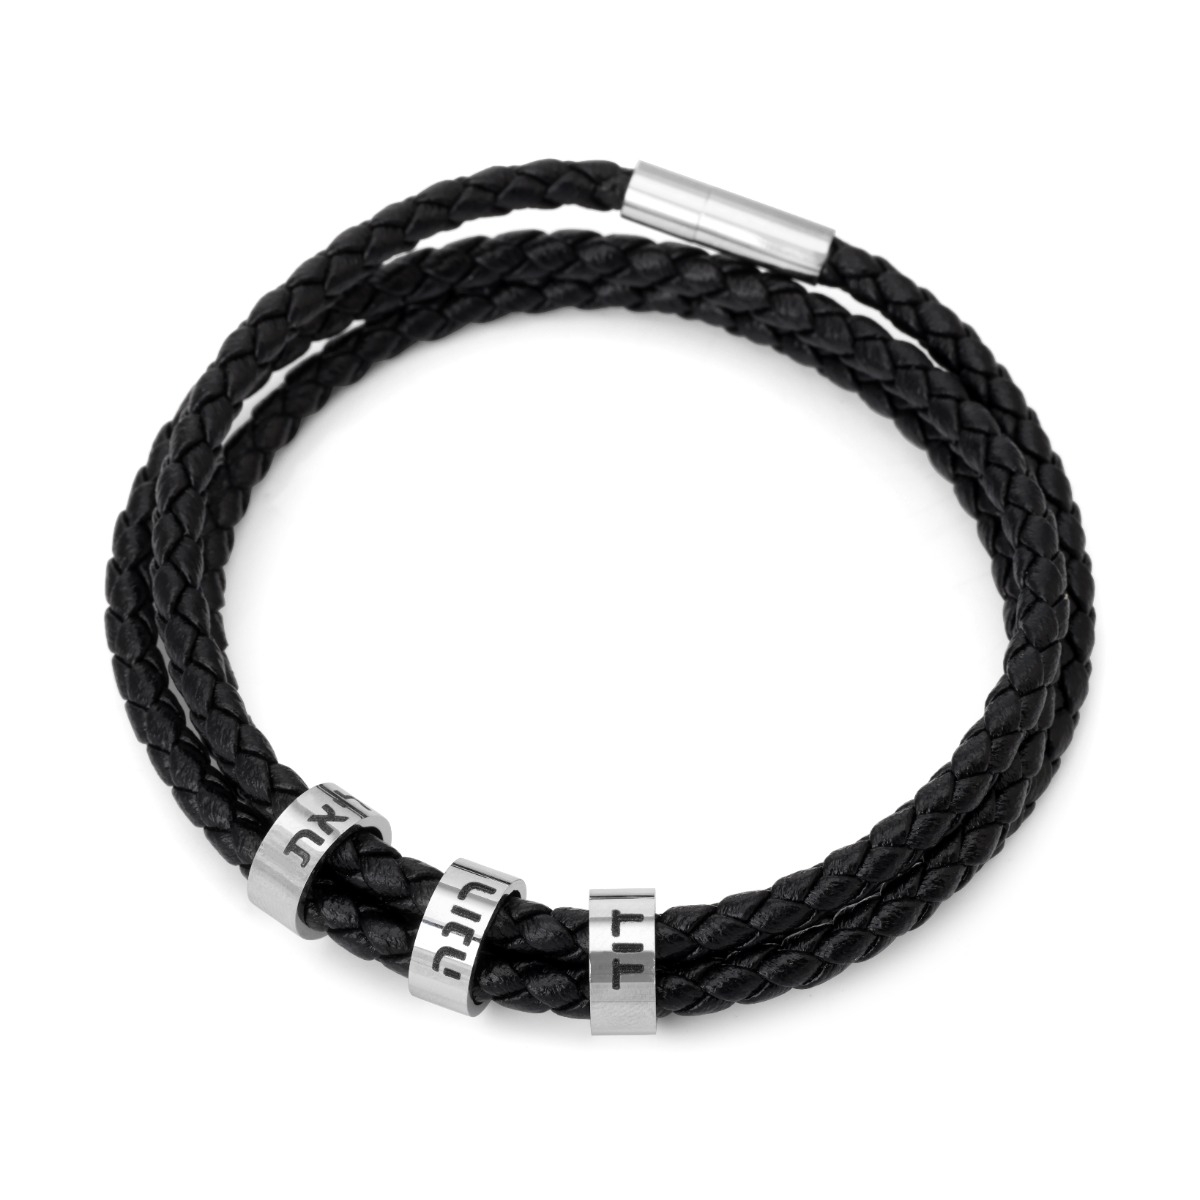 Black Leather Hebrew Name Bracelet for Dads - Up To 5 Names - 1